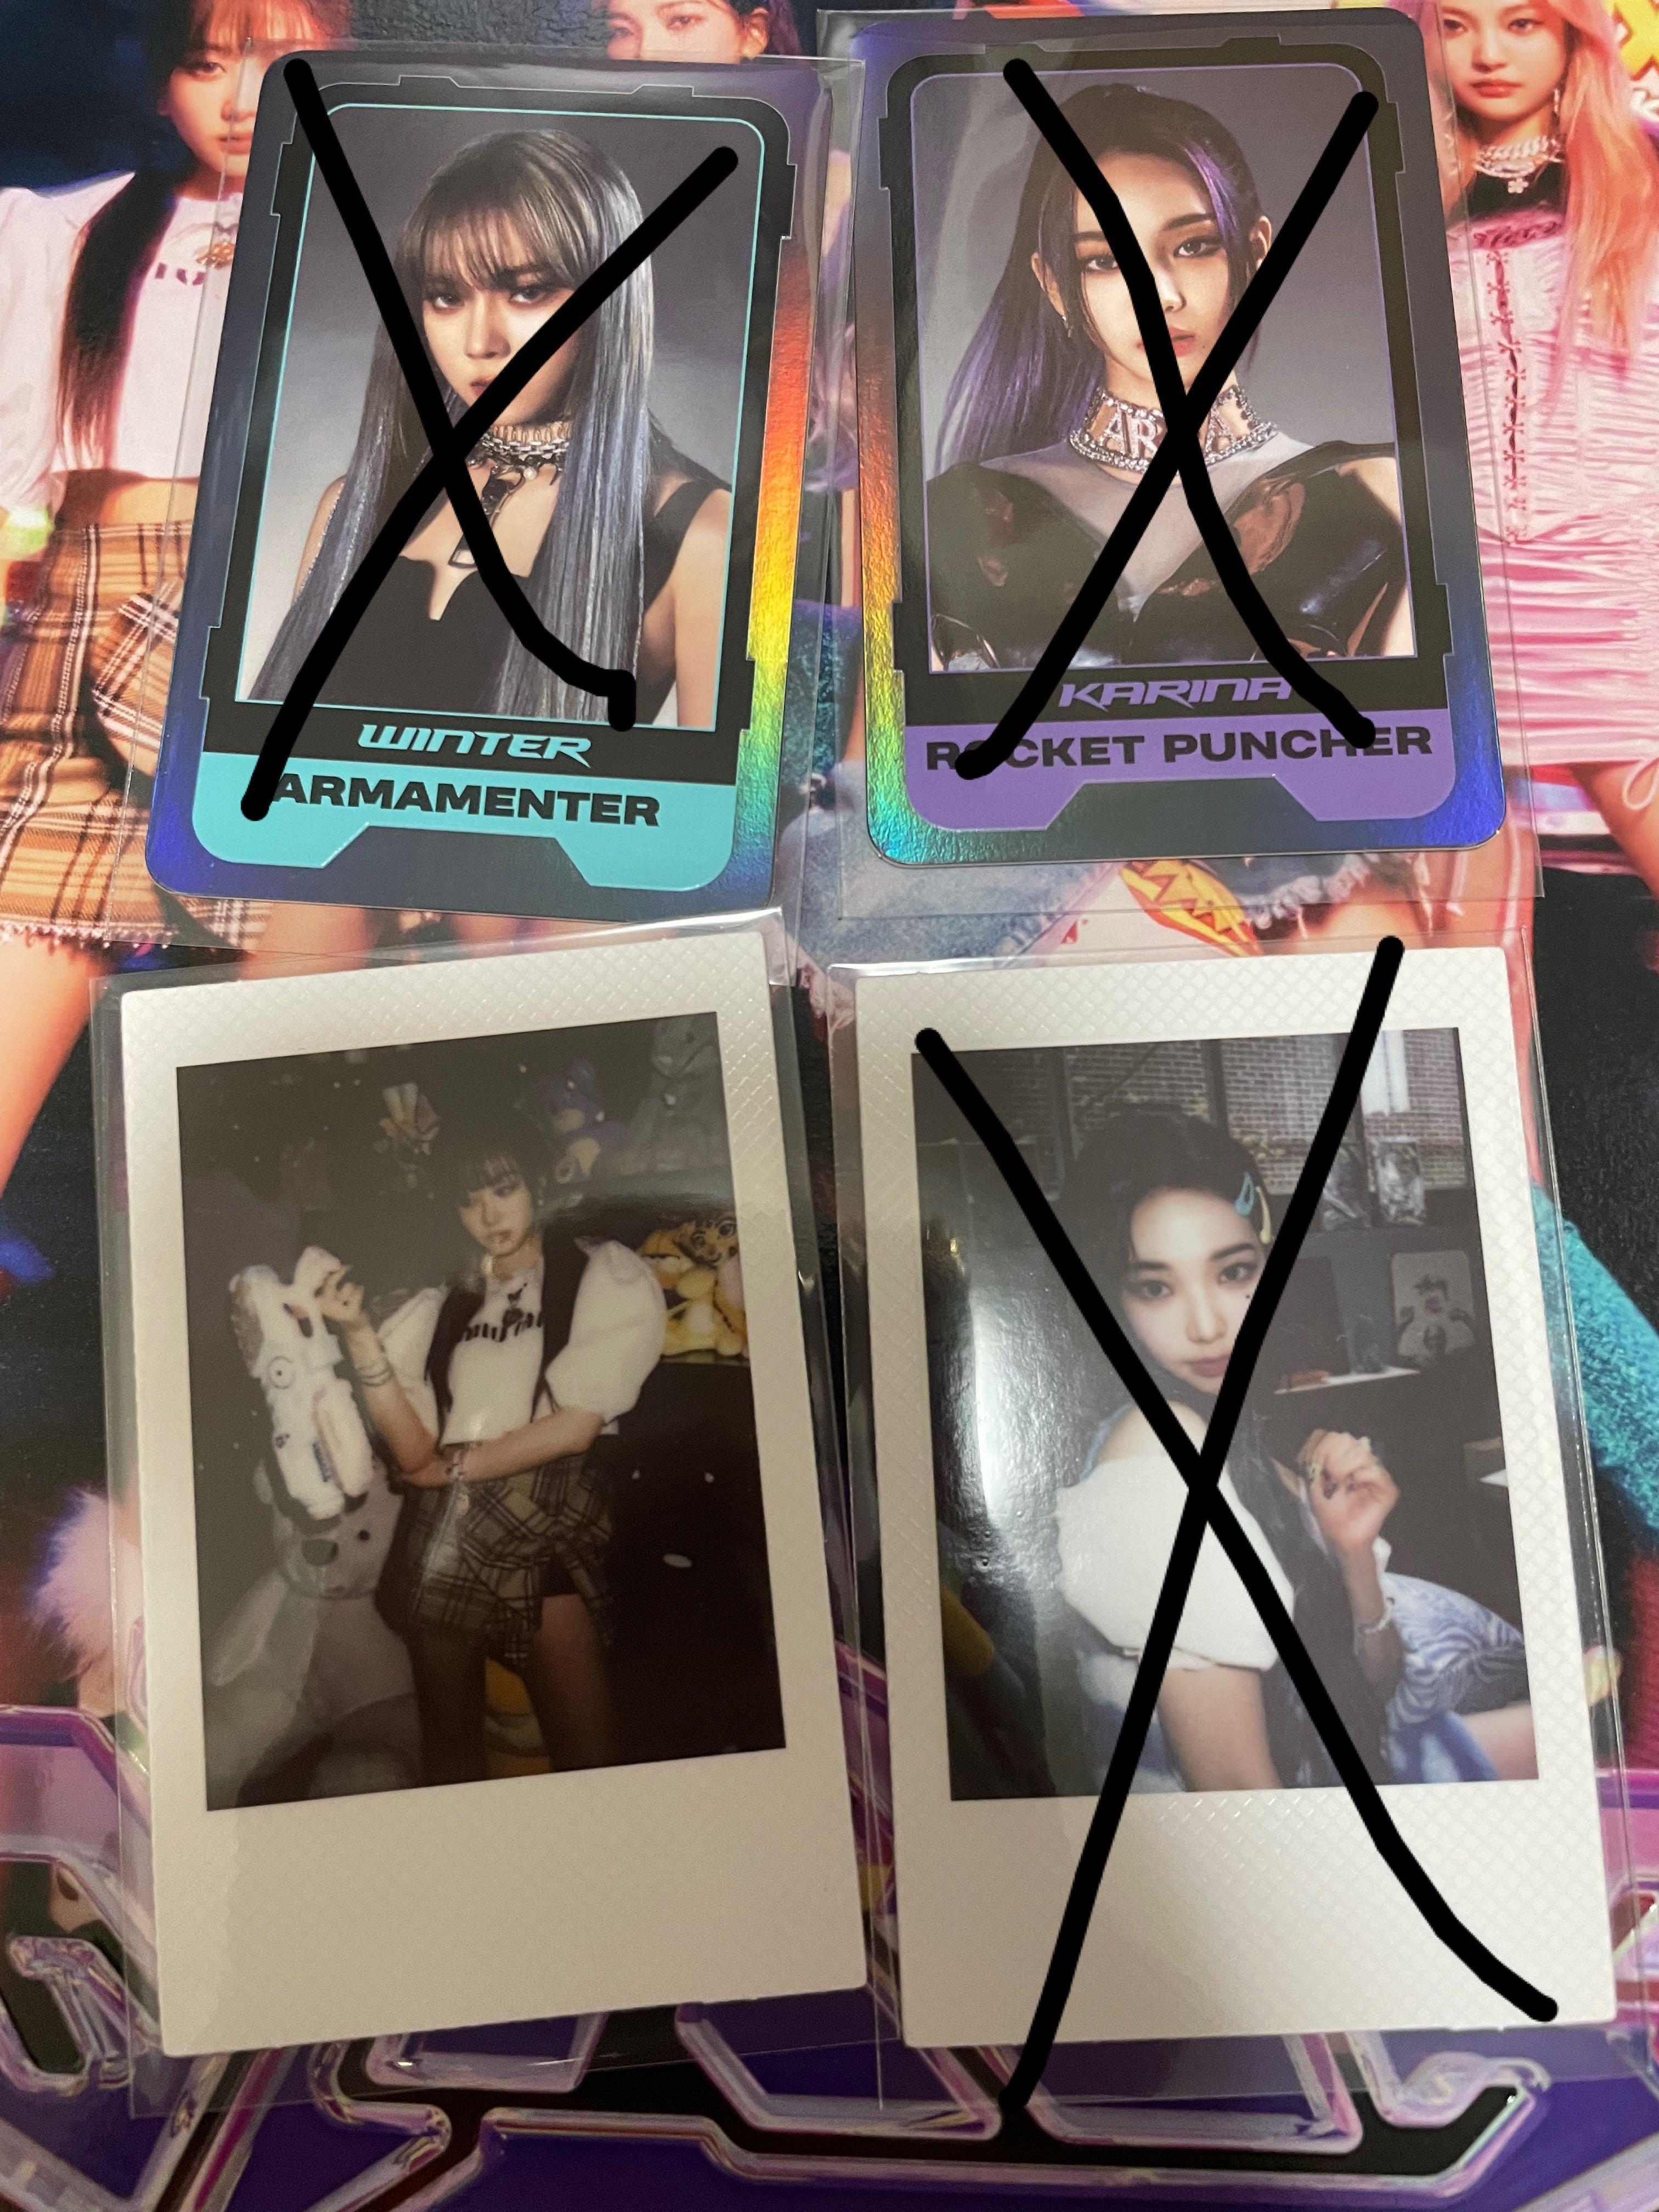 WTS] Aespa Girls Kwangya Character Card and Polaroid Karina Winter